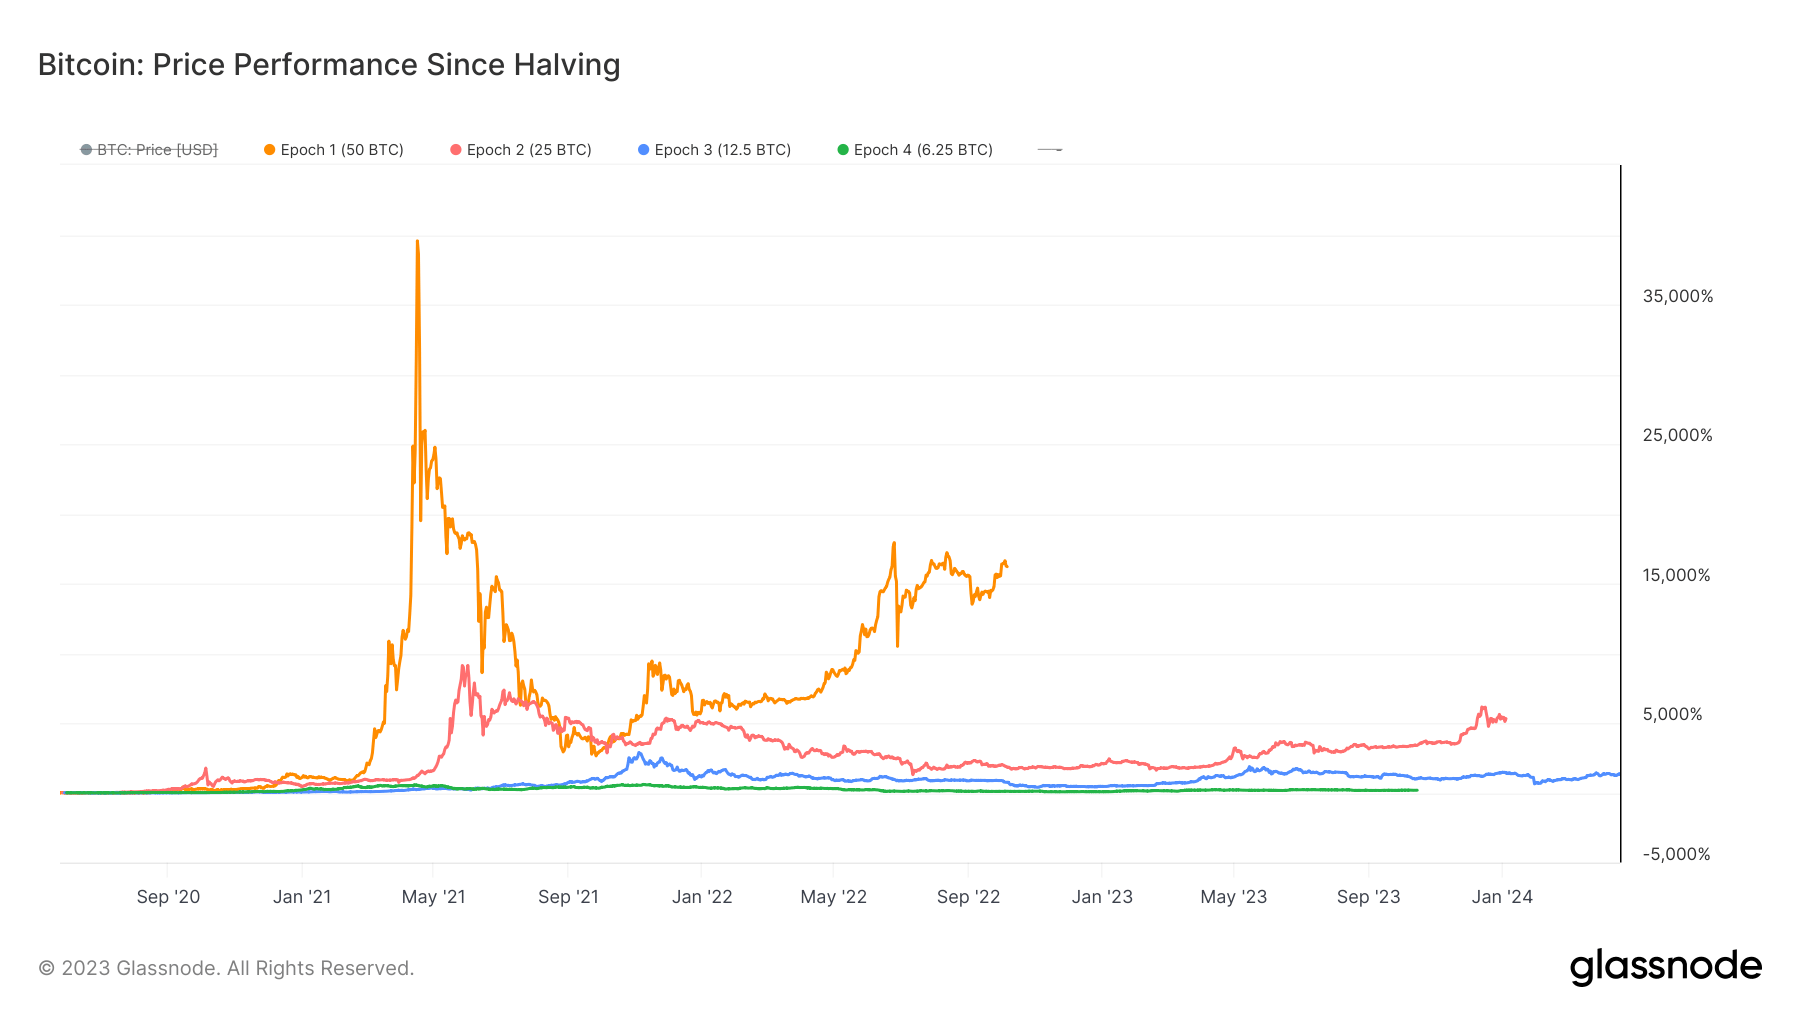 Bitcoin price performance since halving: (Source: Glassnode)